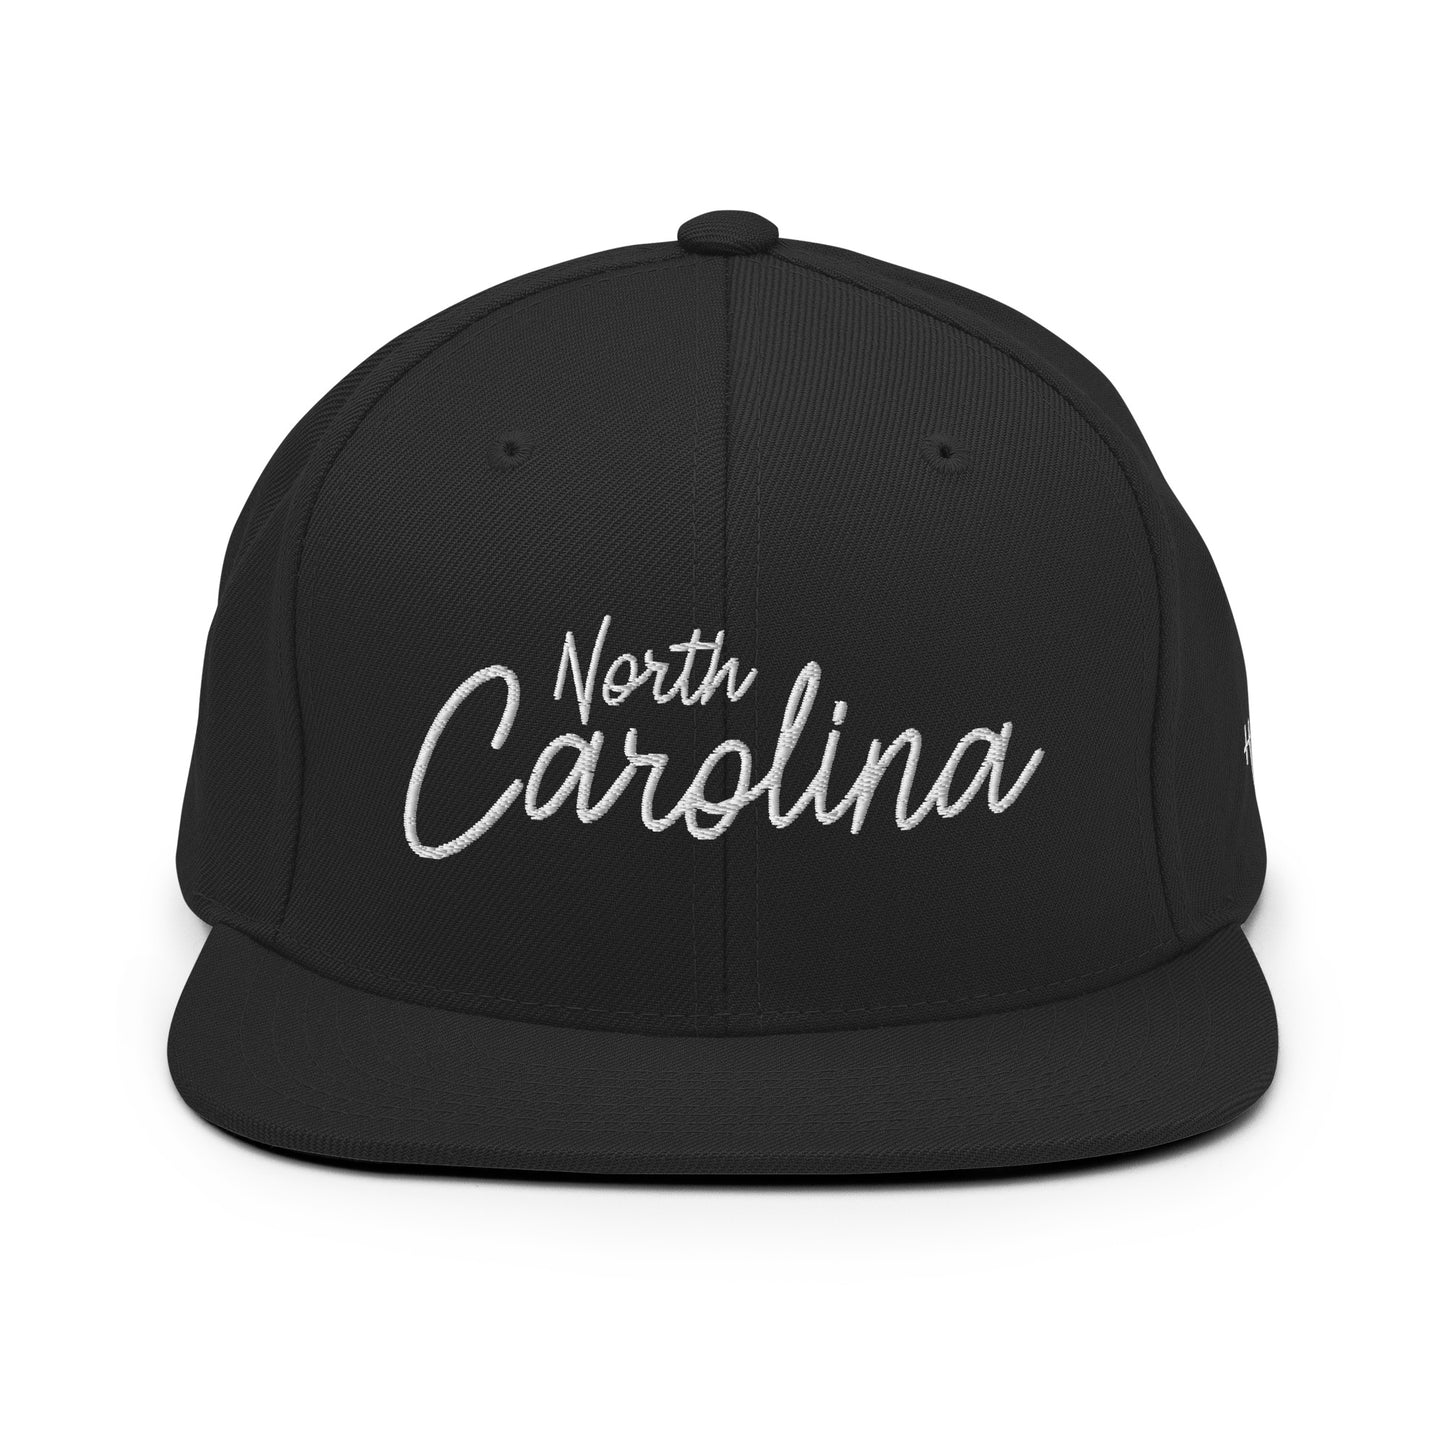 North Carolina Retro Script 6 Panel Snapback Hat